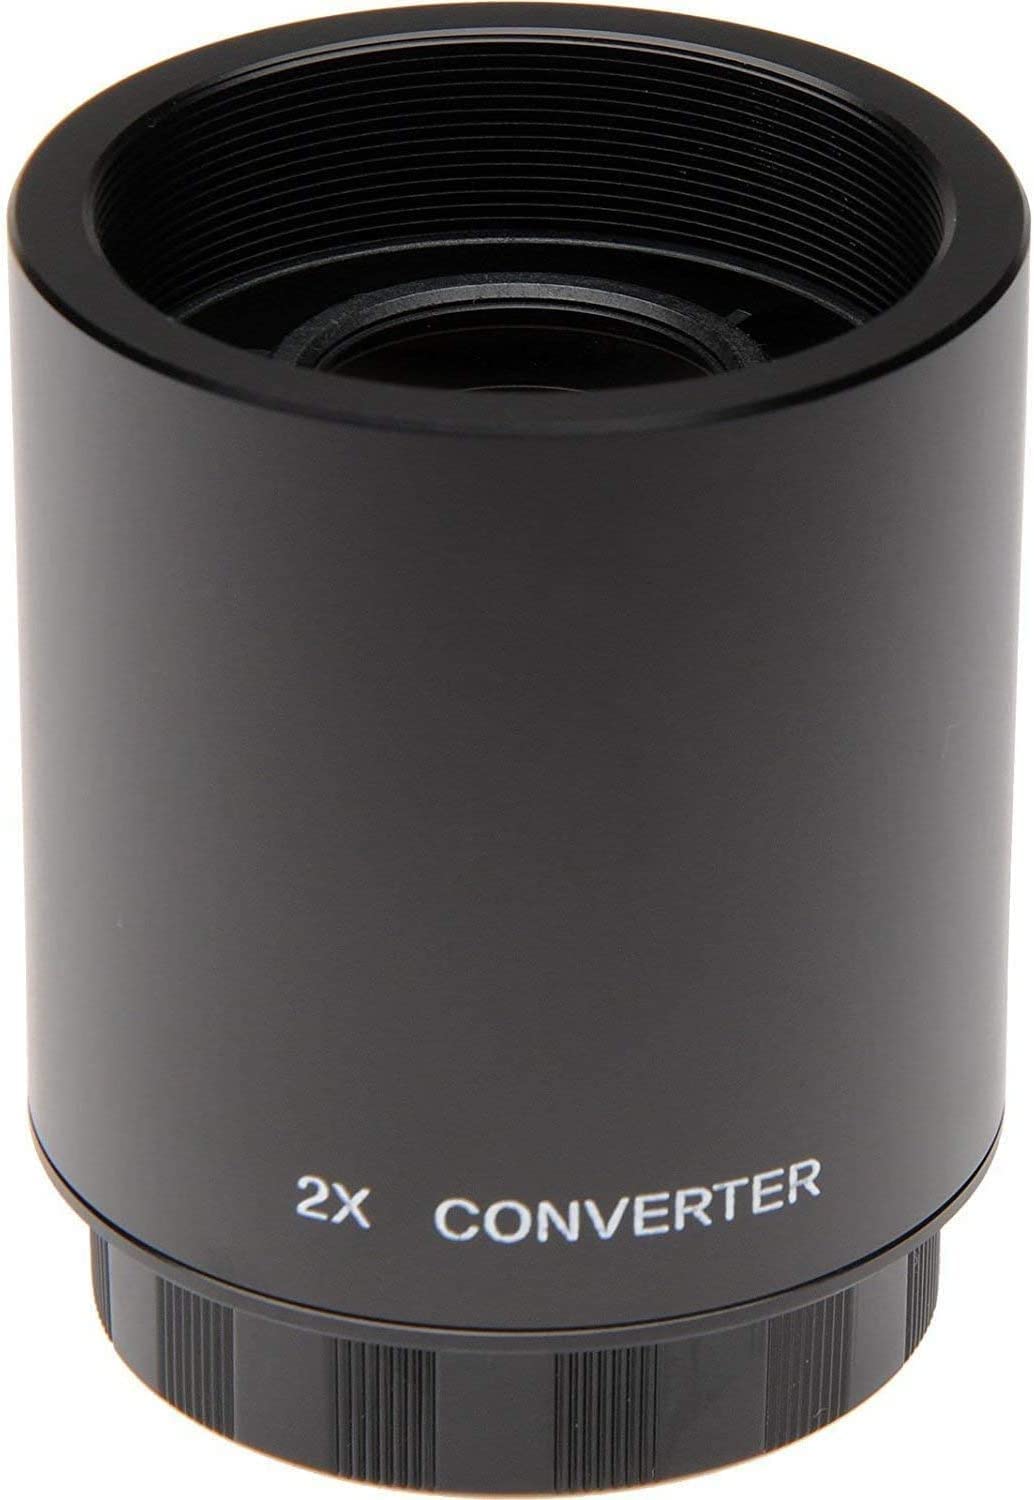 JINTU 420-1600mm f/8.3 Manual Telephoto Zoom Lens for Nikon SLR Camera  D5600 D5500 D5200 D5100 D3300 D3200 D3400 D7200 D750 D3500 D7500 D600 D800  D810